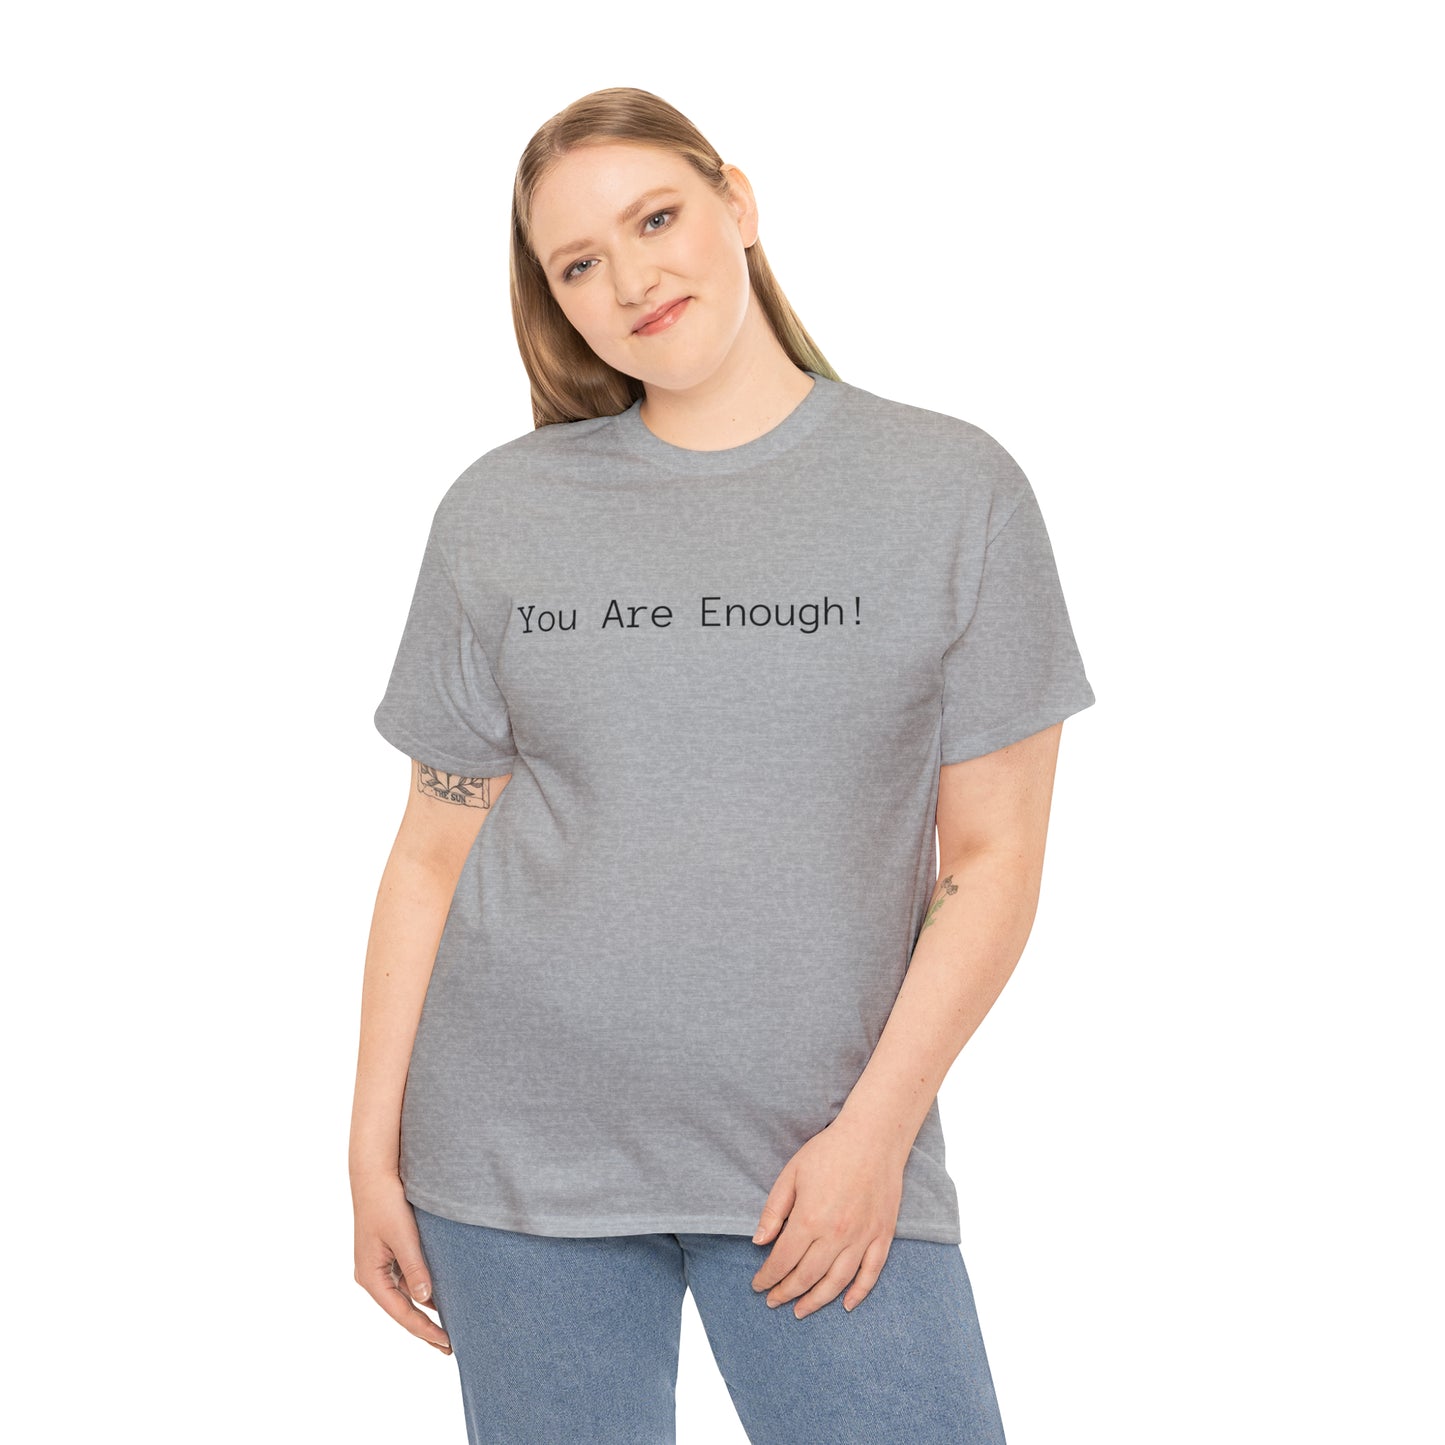 You Are Enough! Cotton T-Shirt Inspiratonal Unisex